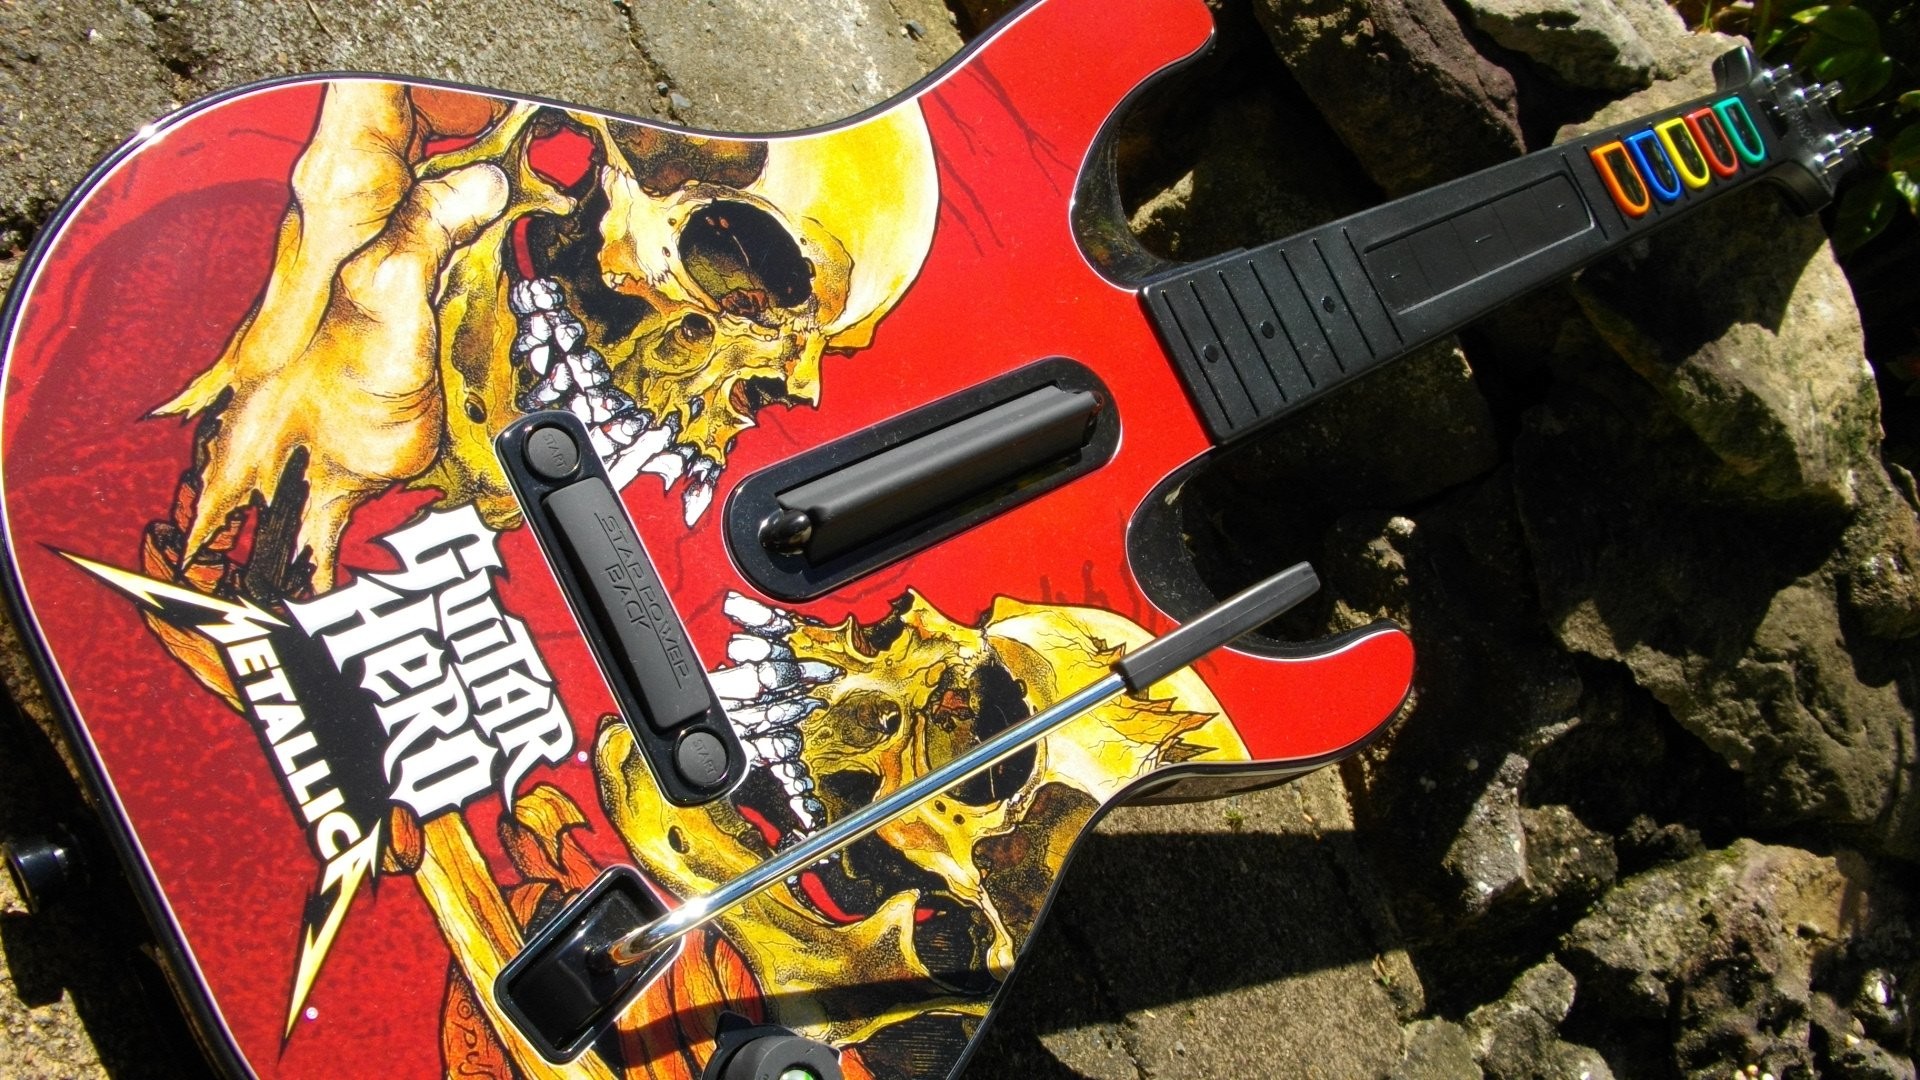 1920x1080 GUITAR HERO music guitars heavy metal rock hard 1ghero rhythm guitarhero  poster wallpaper |  | 644779 | WallpaperUP